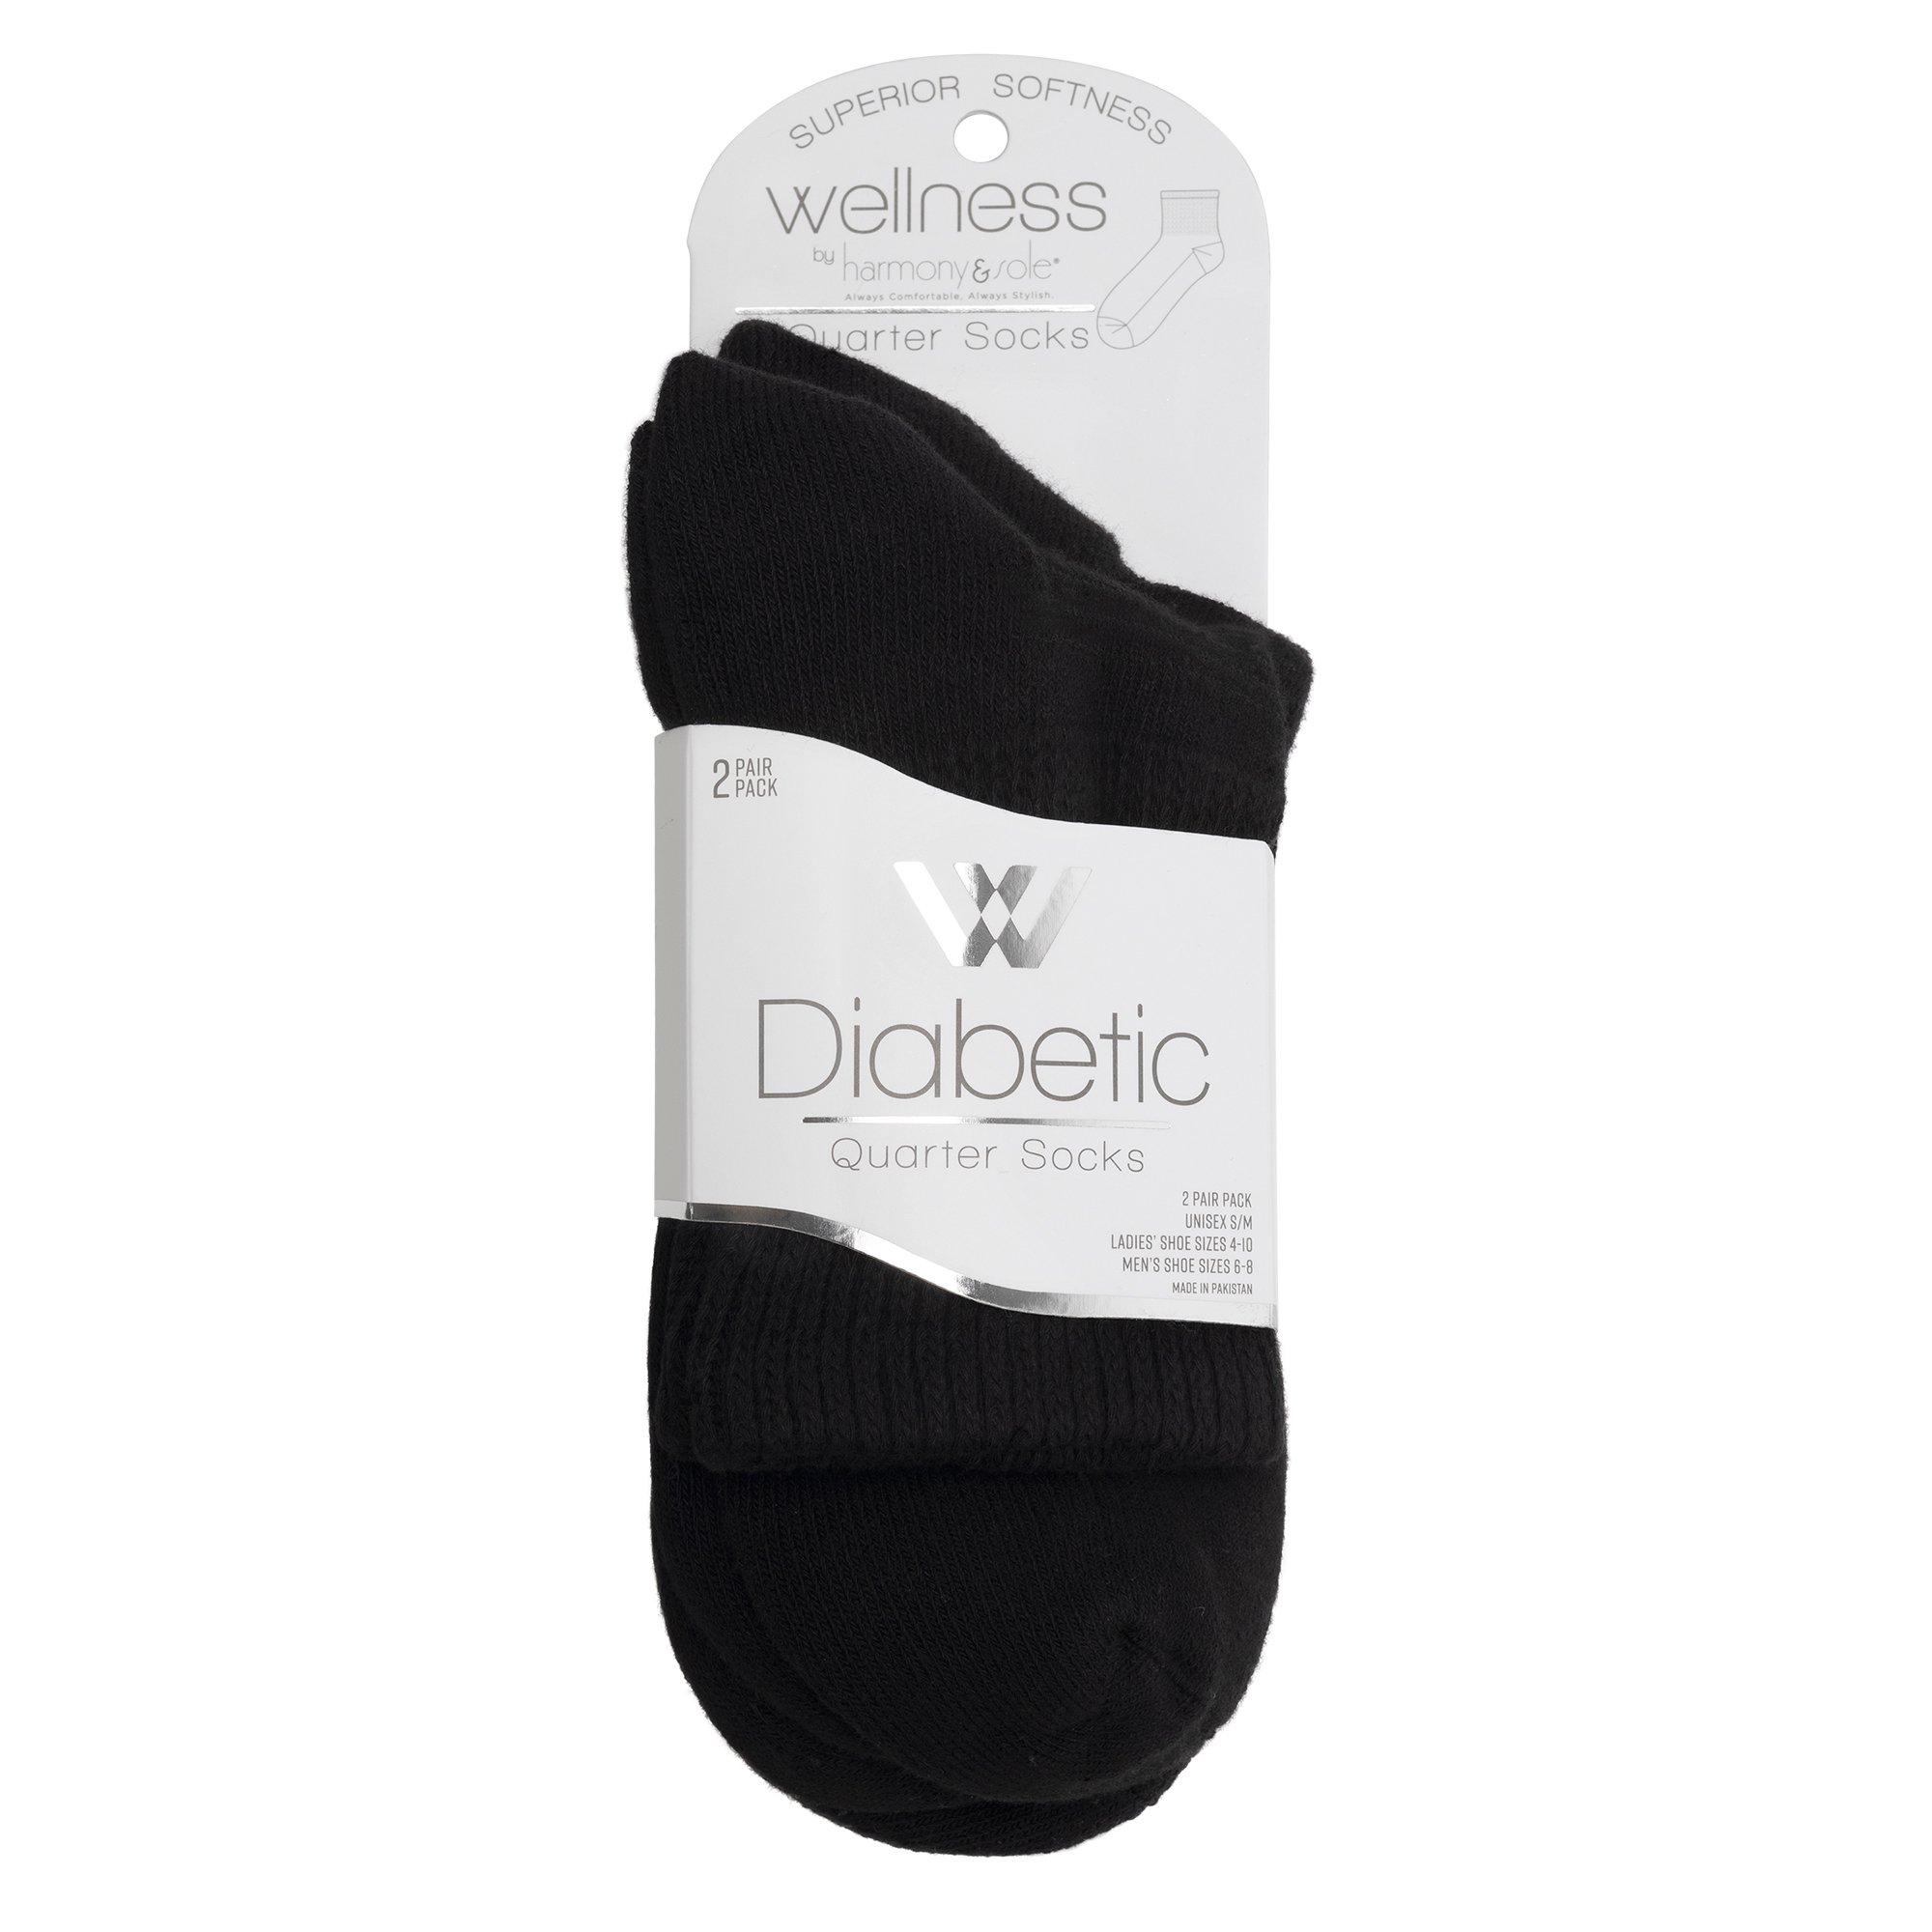 Pack of 2 pairs of black ankle socks for women